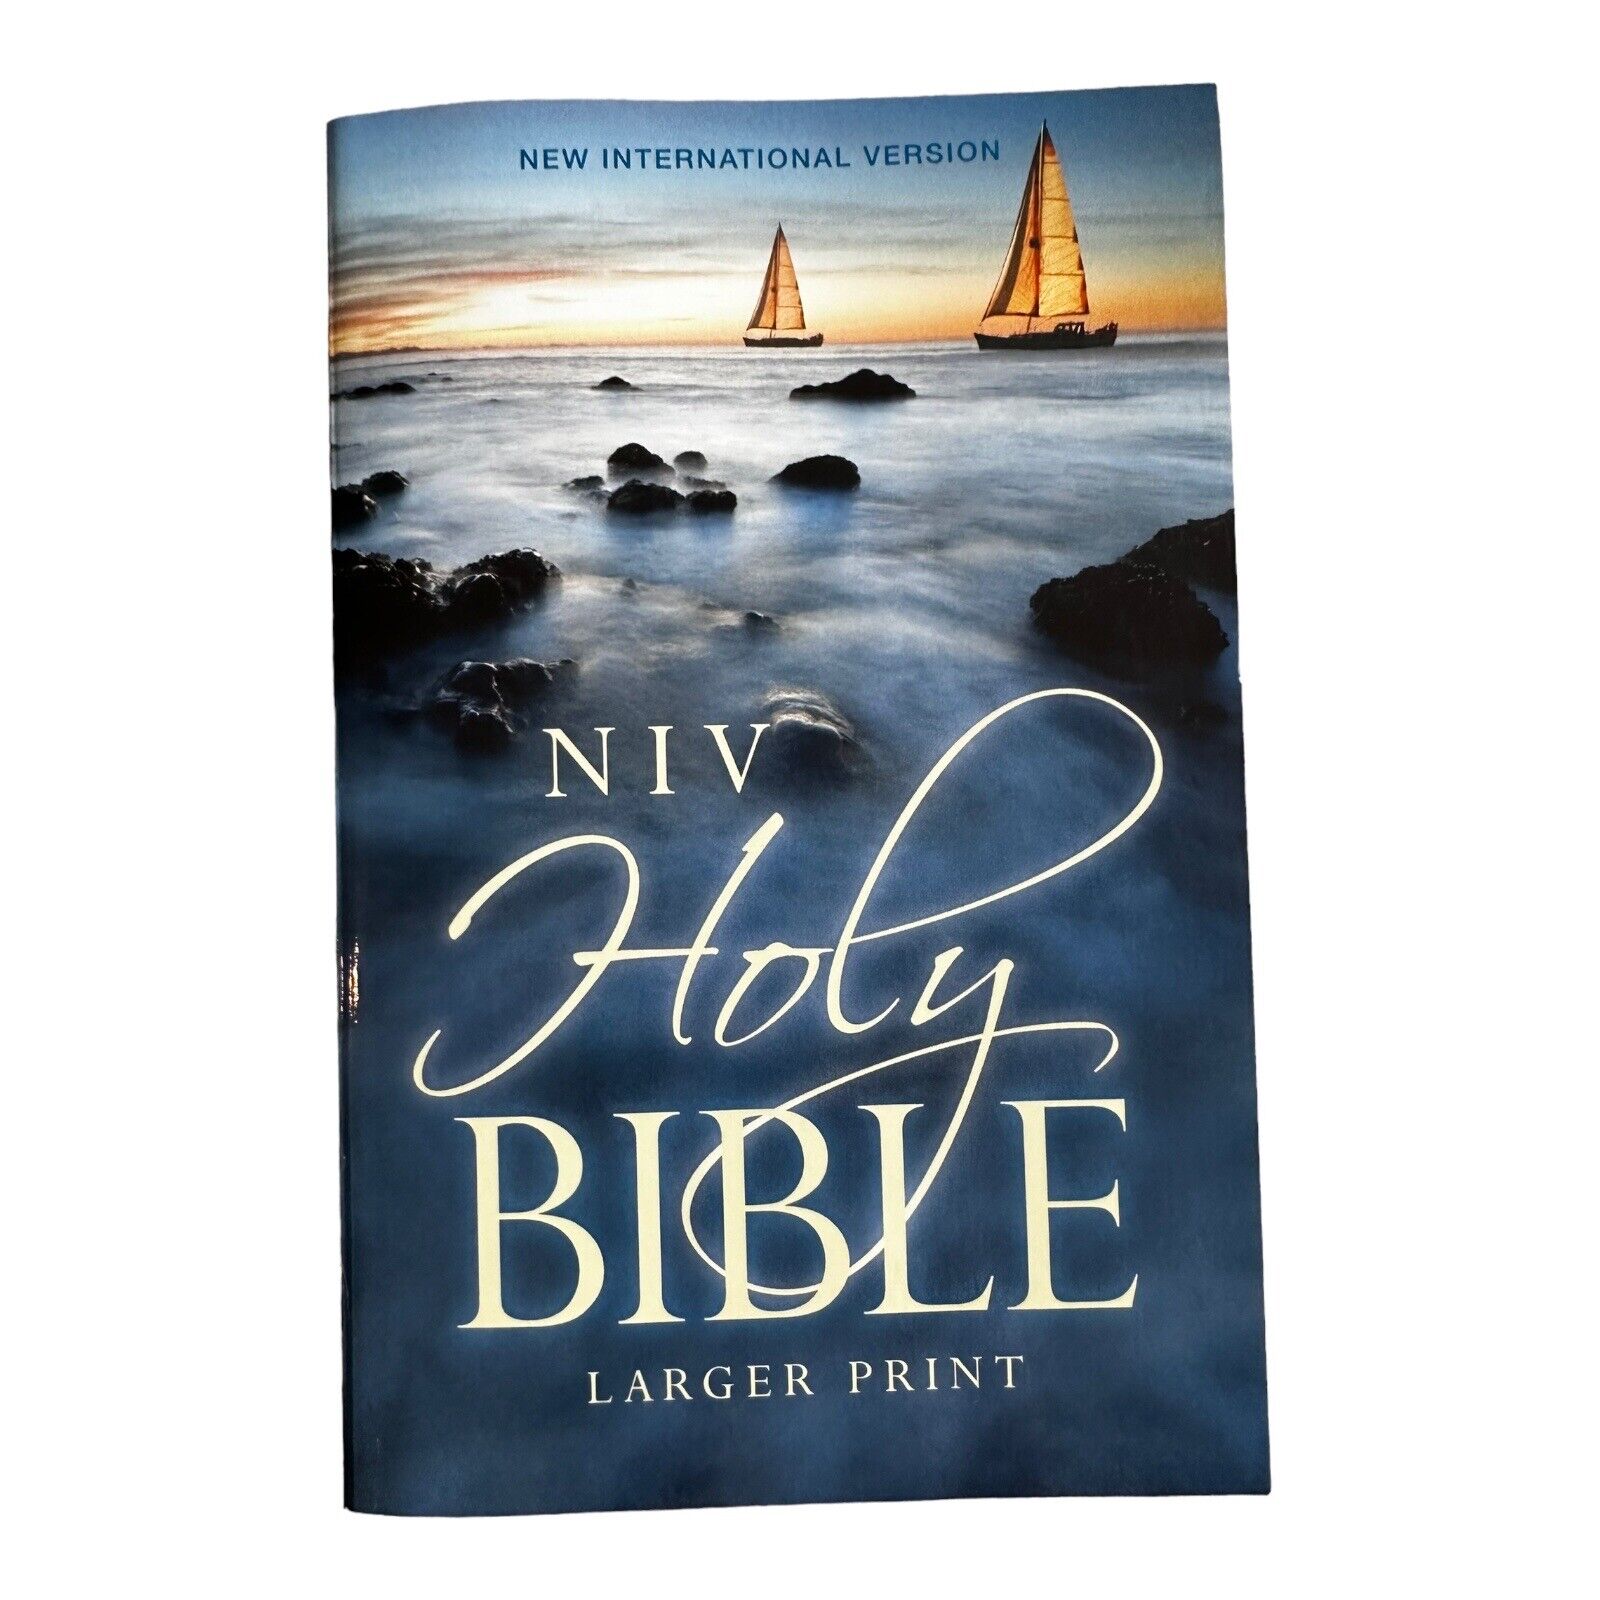 The NIV Holy Bible: New International Version Large Print Paperback - VERY GOOD